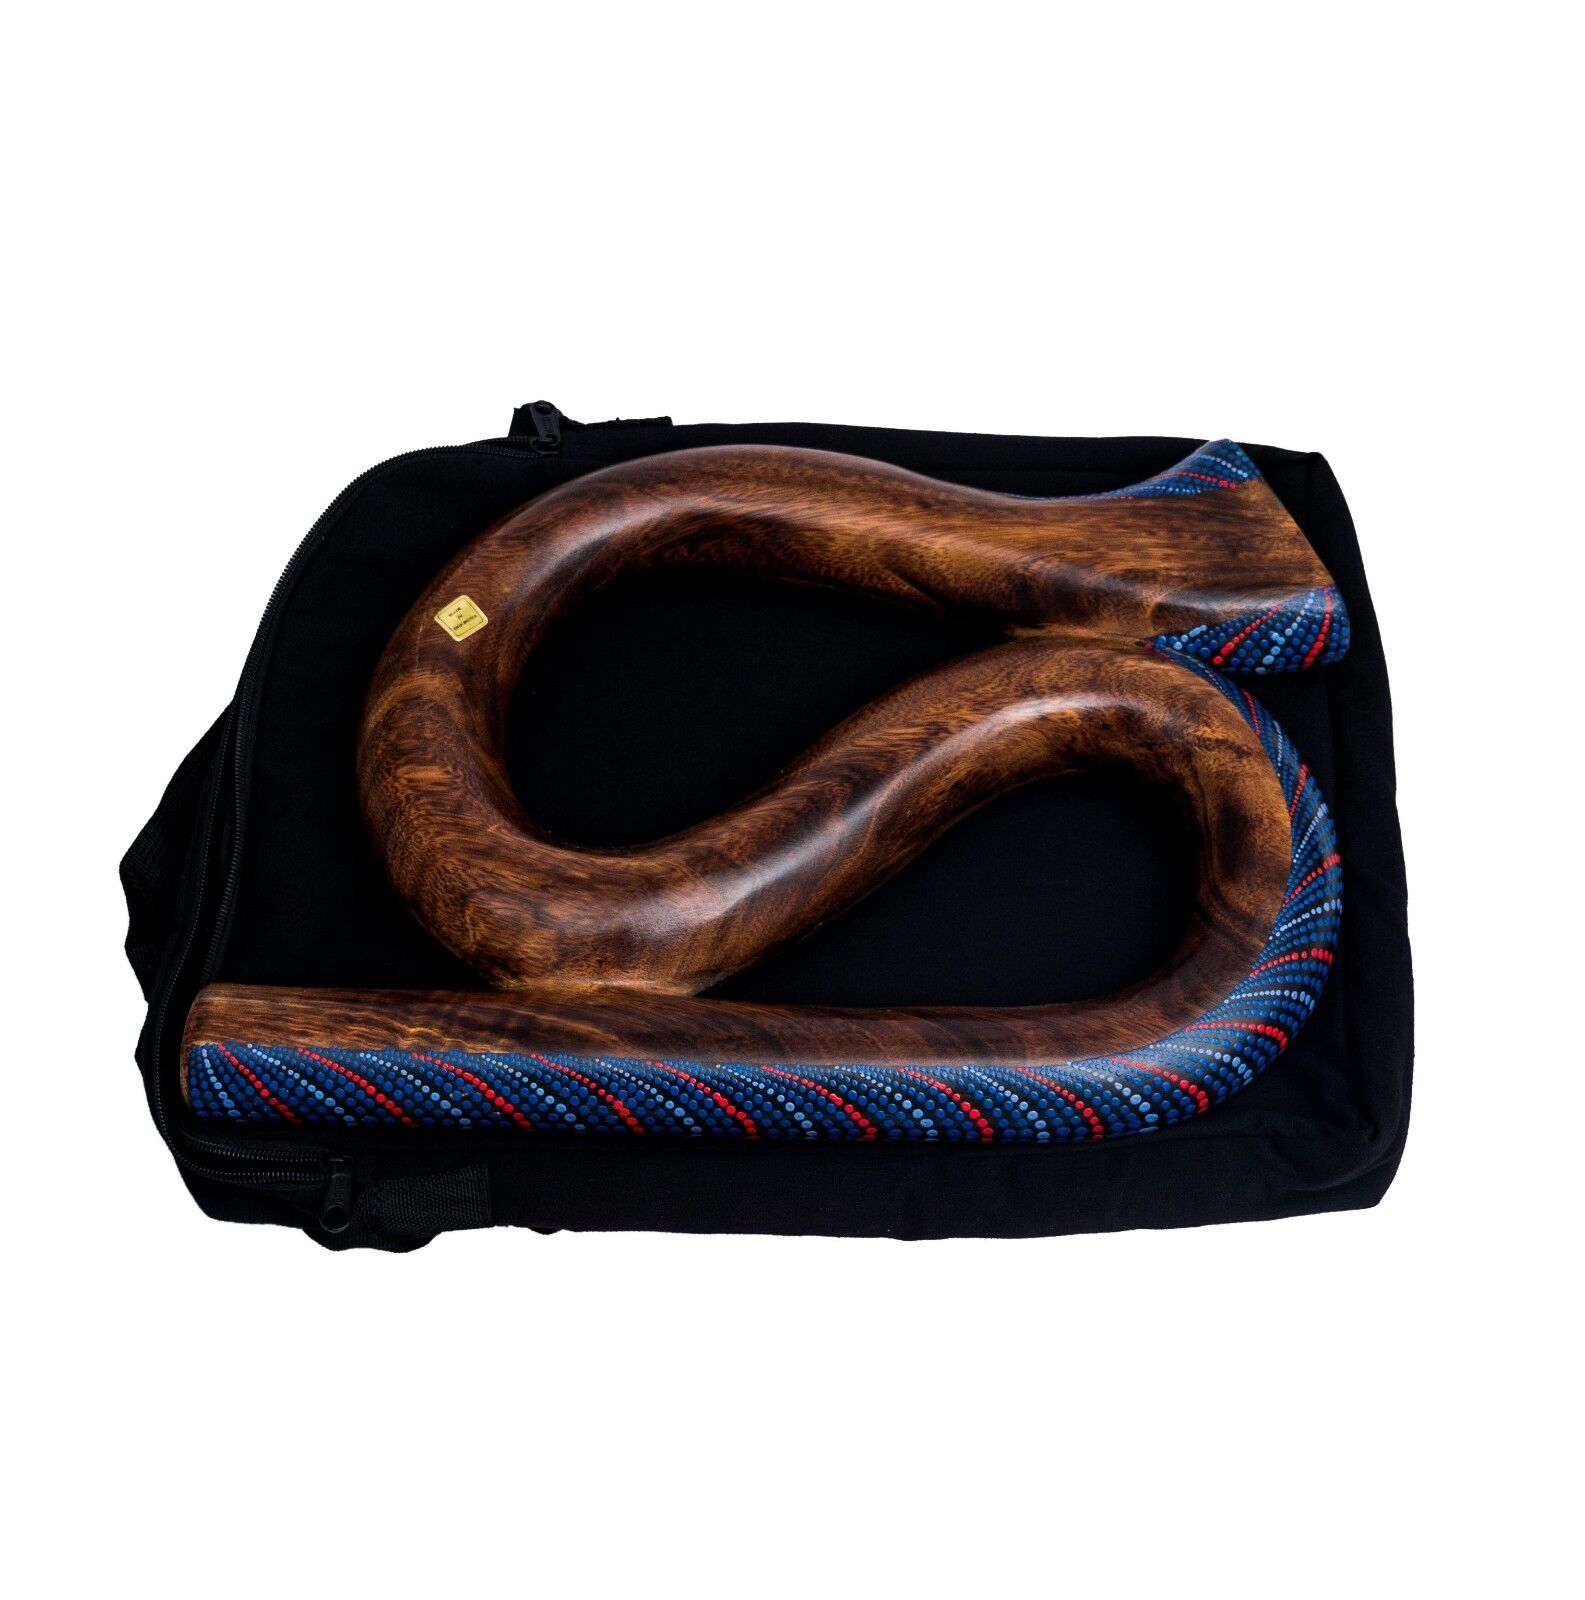  Didgeridoo Instrument Travel S Shaped Round Travel Travel Music Didgebox Bag